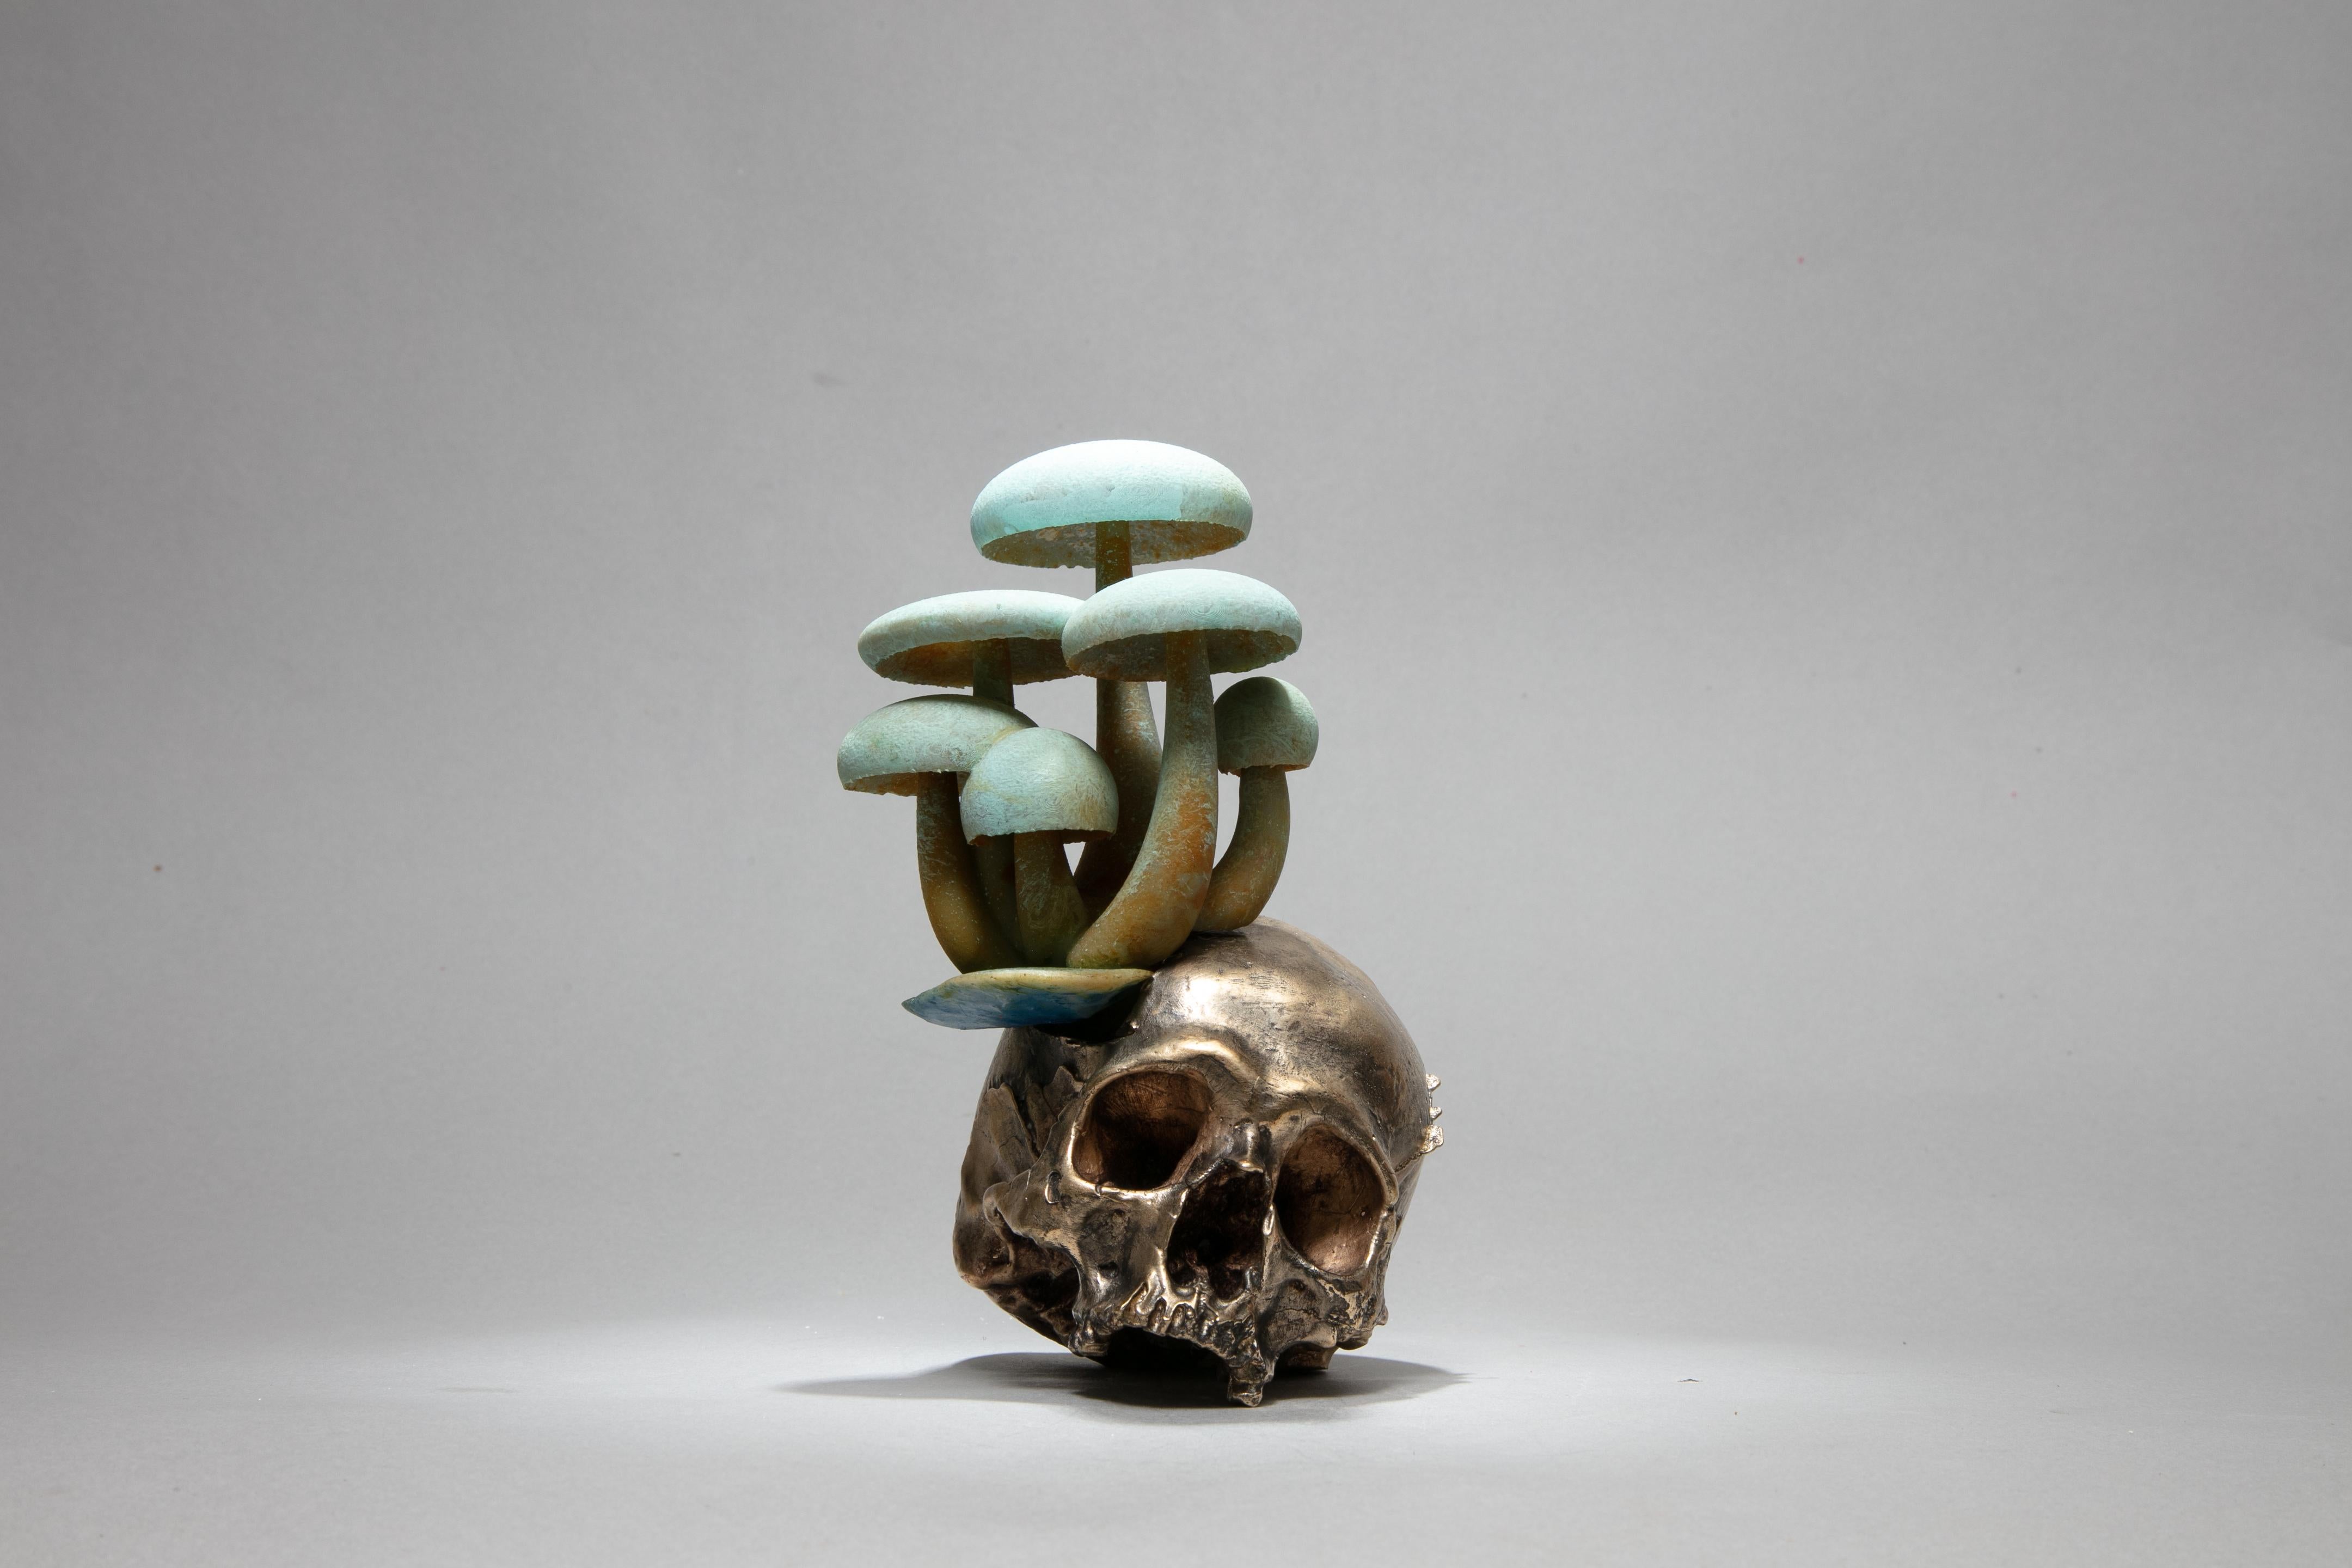 Dana Younger Figurative Sculpture - "Mushroom Skull" Sculpture